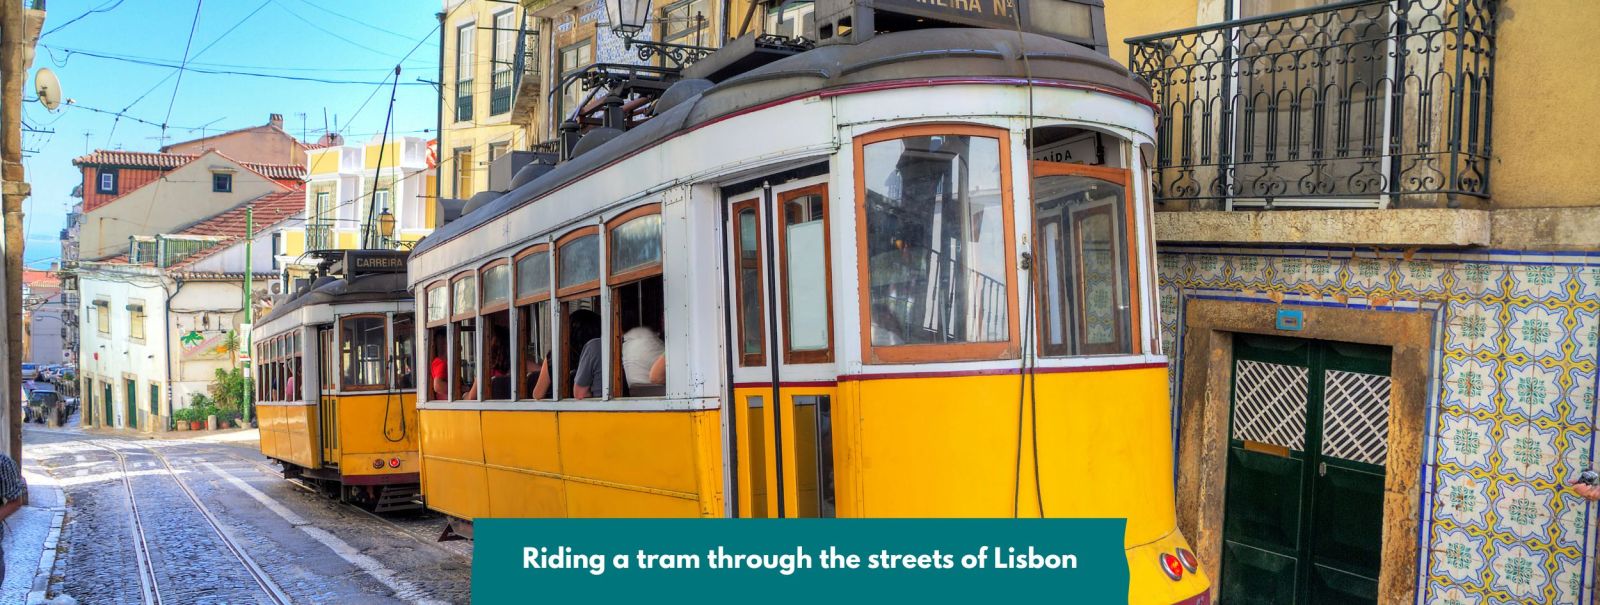 Riding a tram through the streets of Lisbon